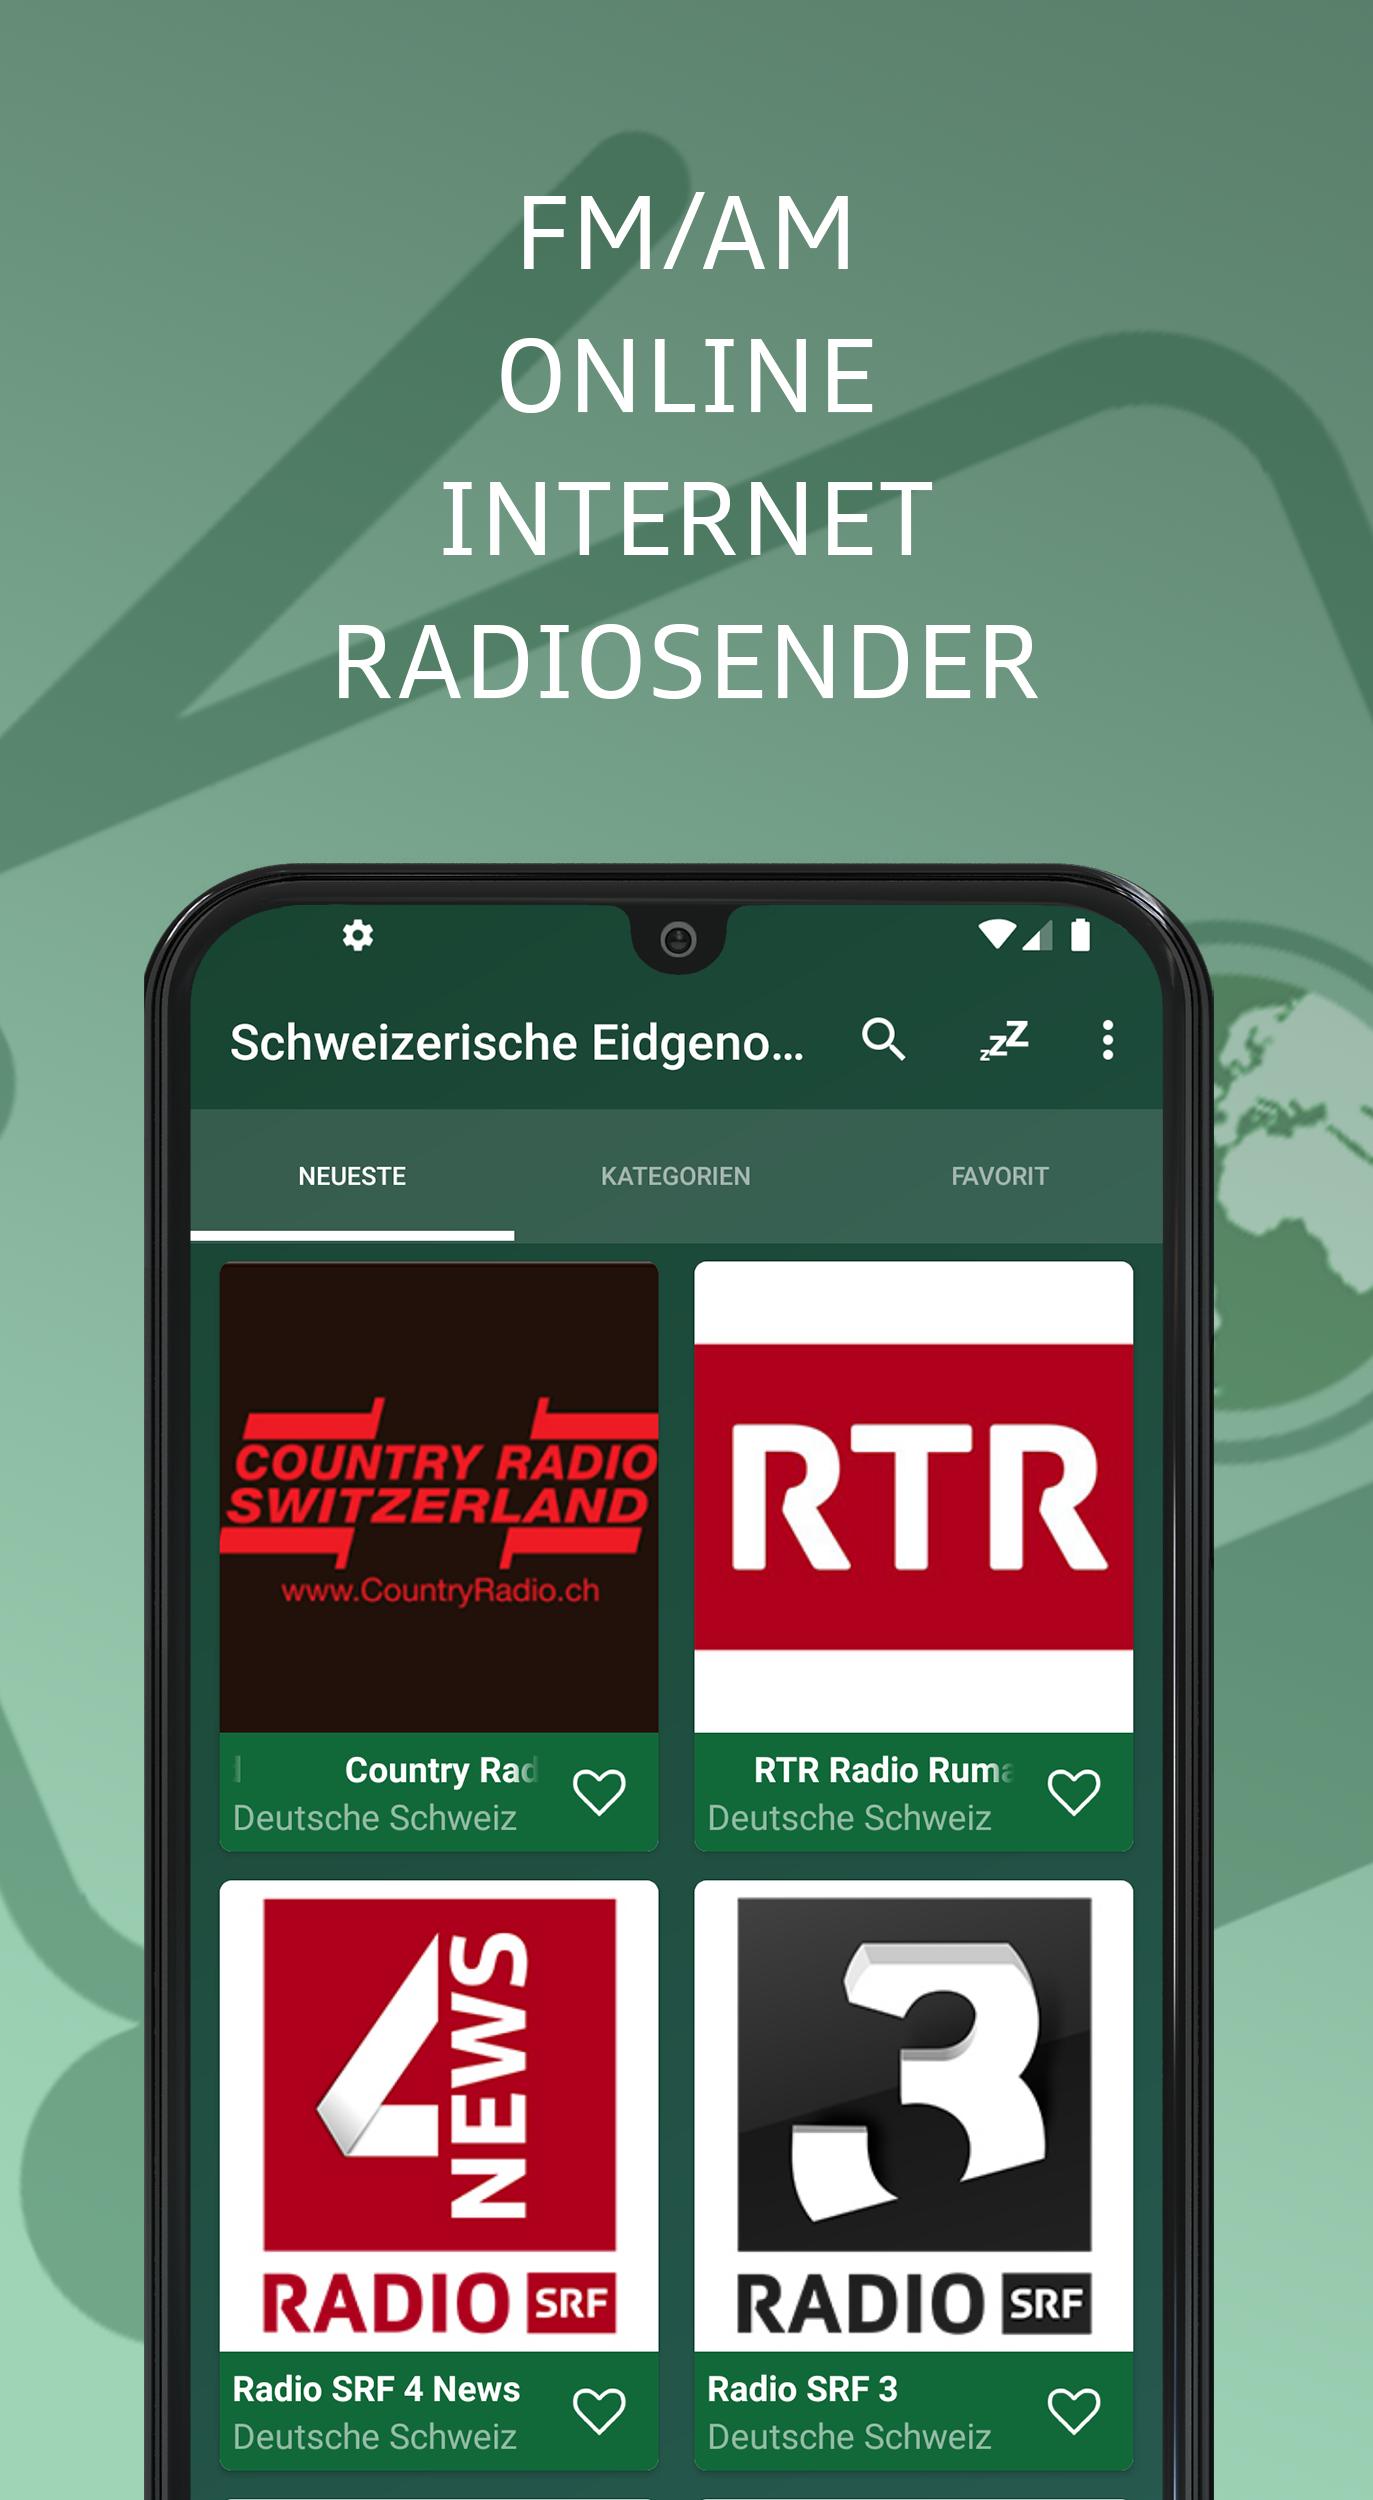 Schweiz Online Radiosenders for Android - APK Download